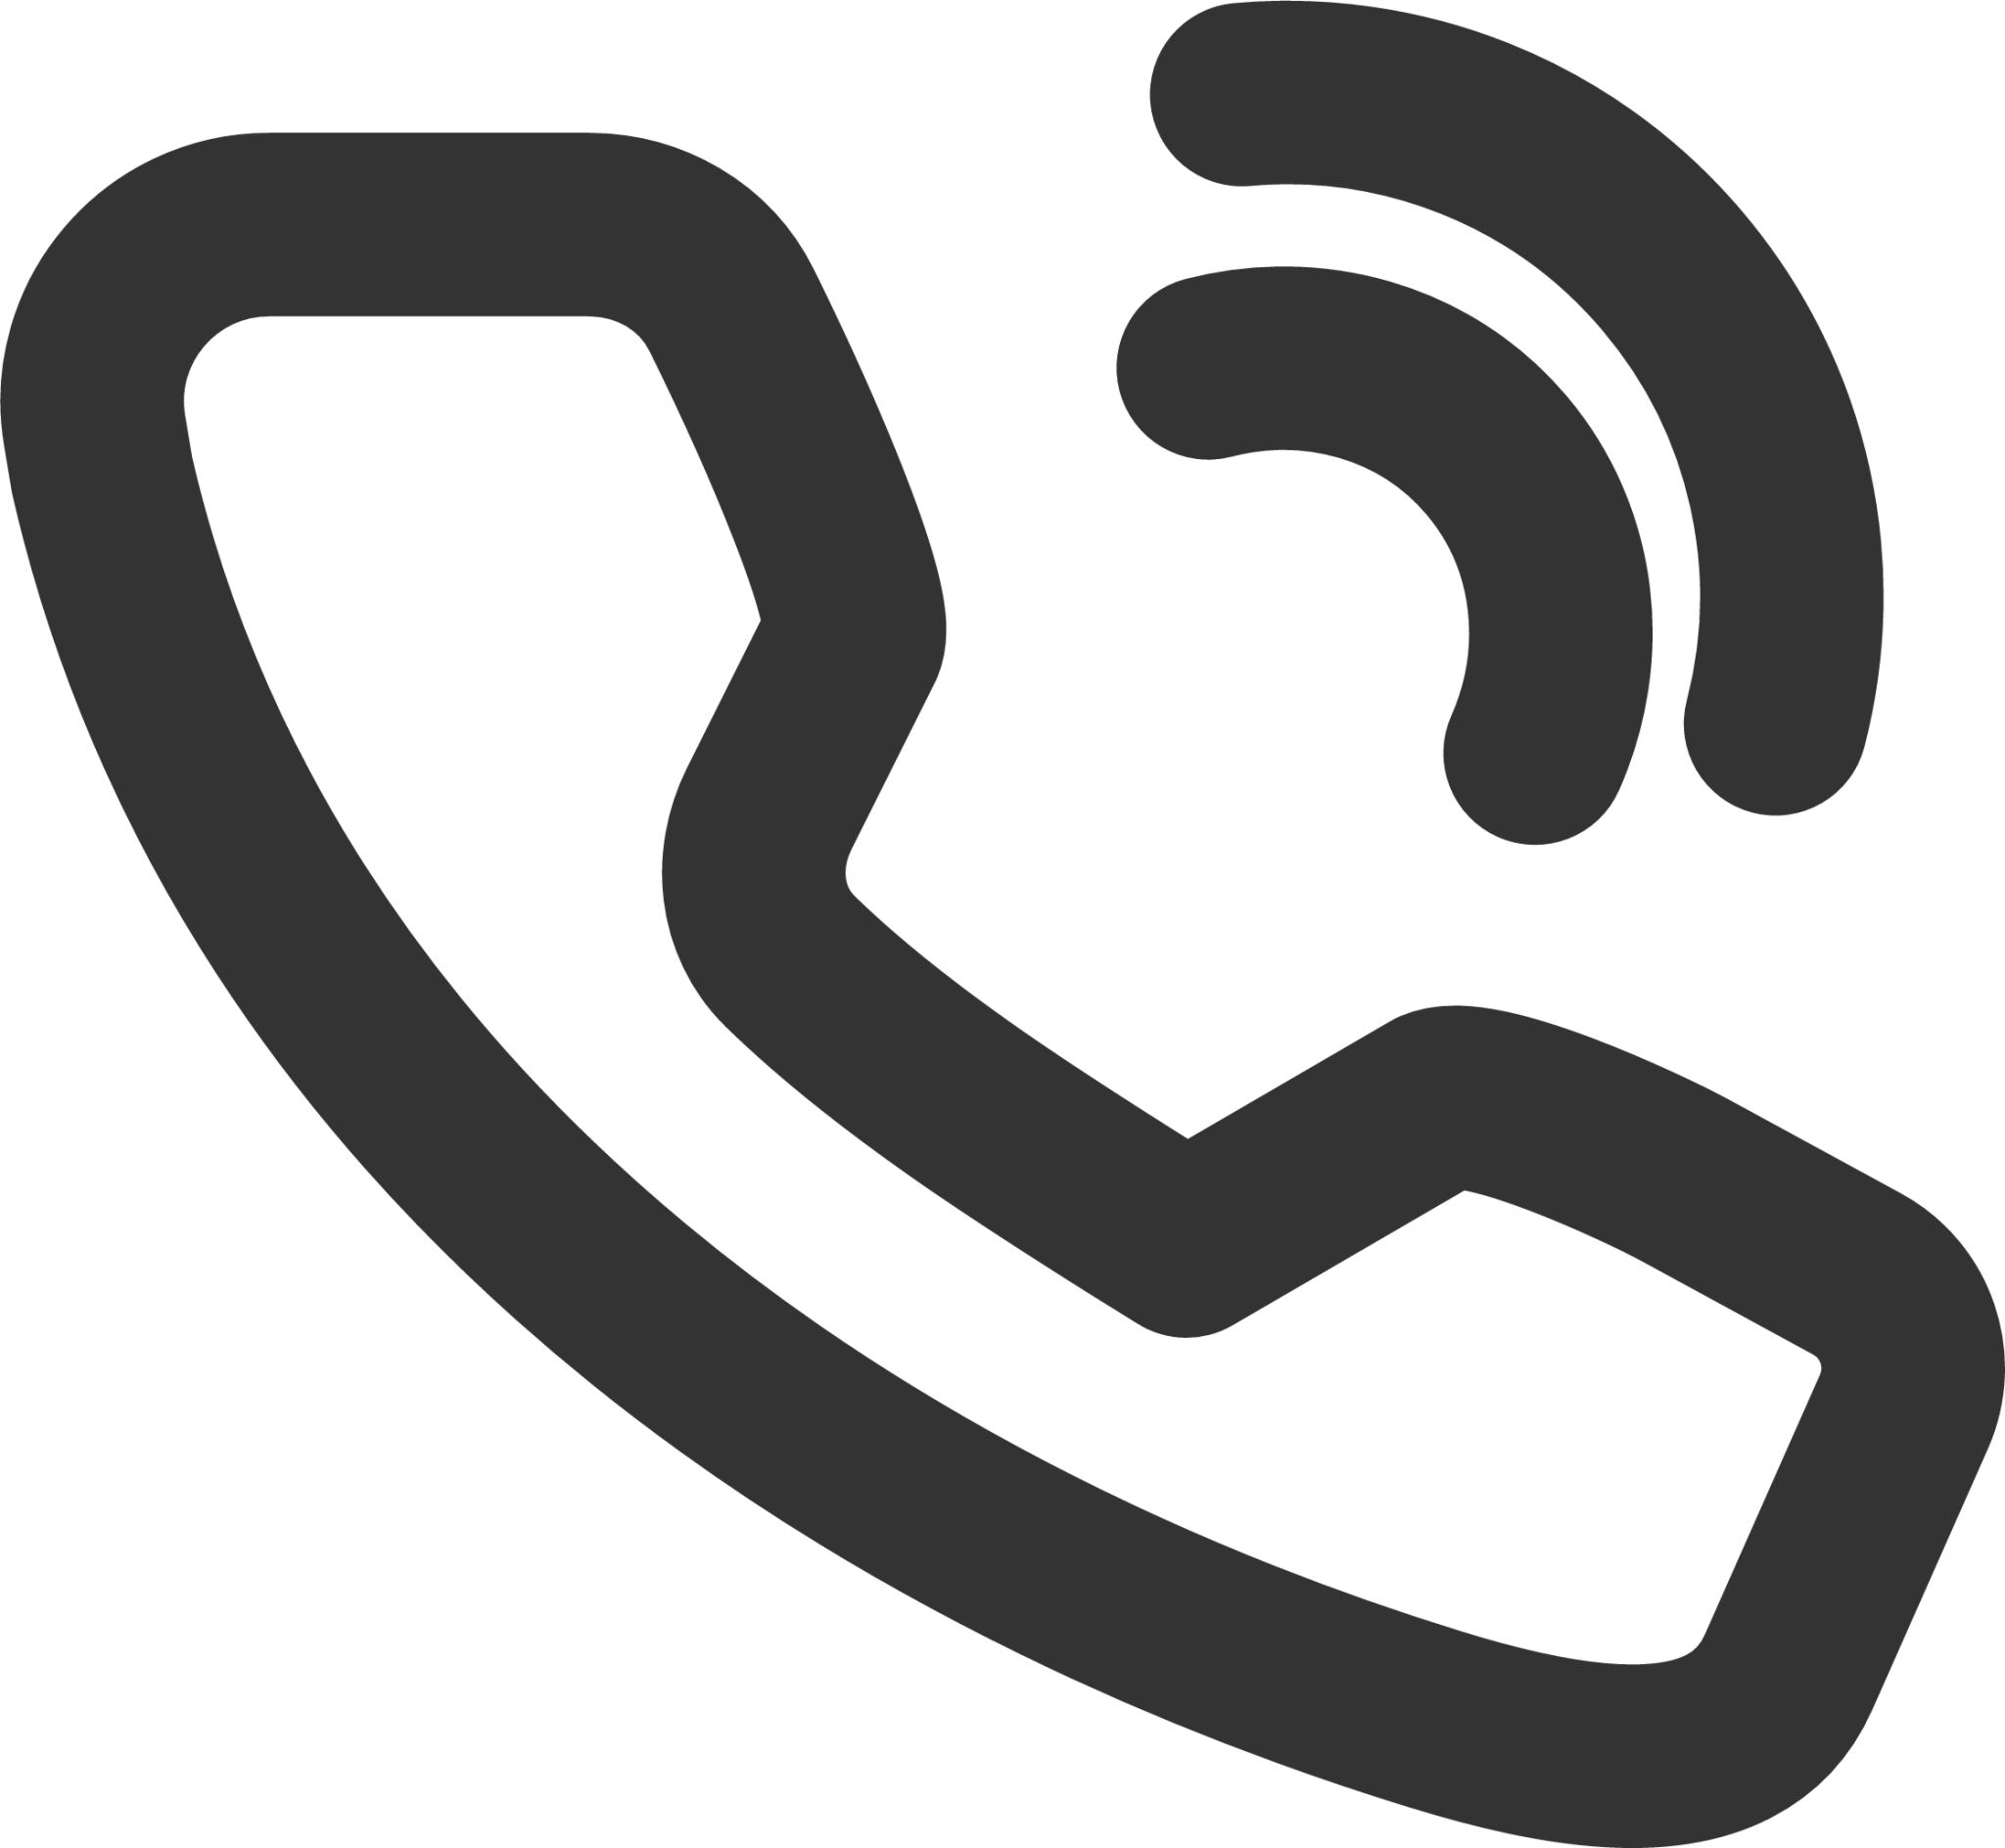 phone ringing icon